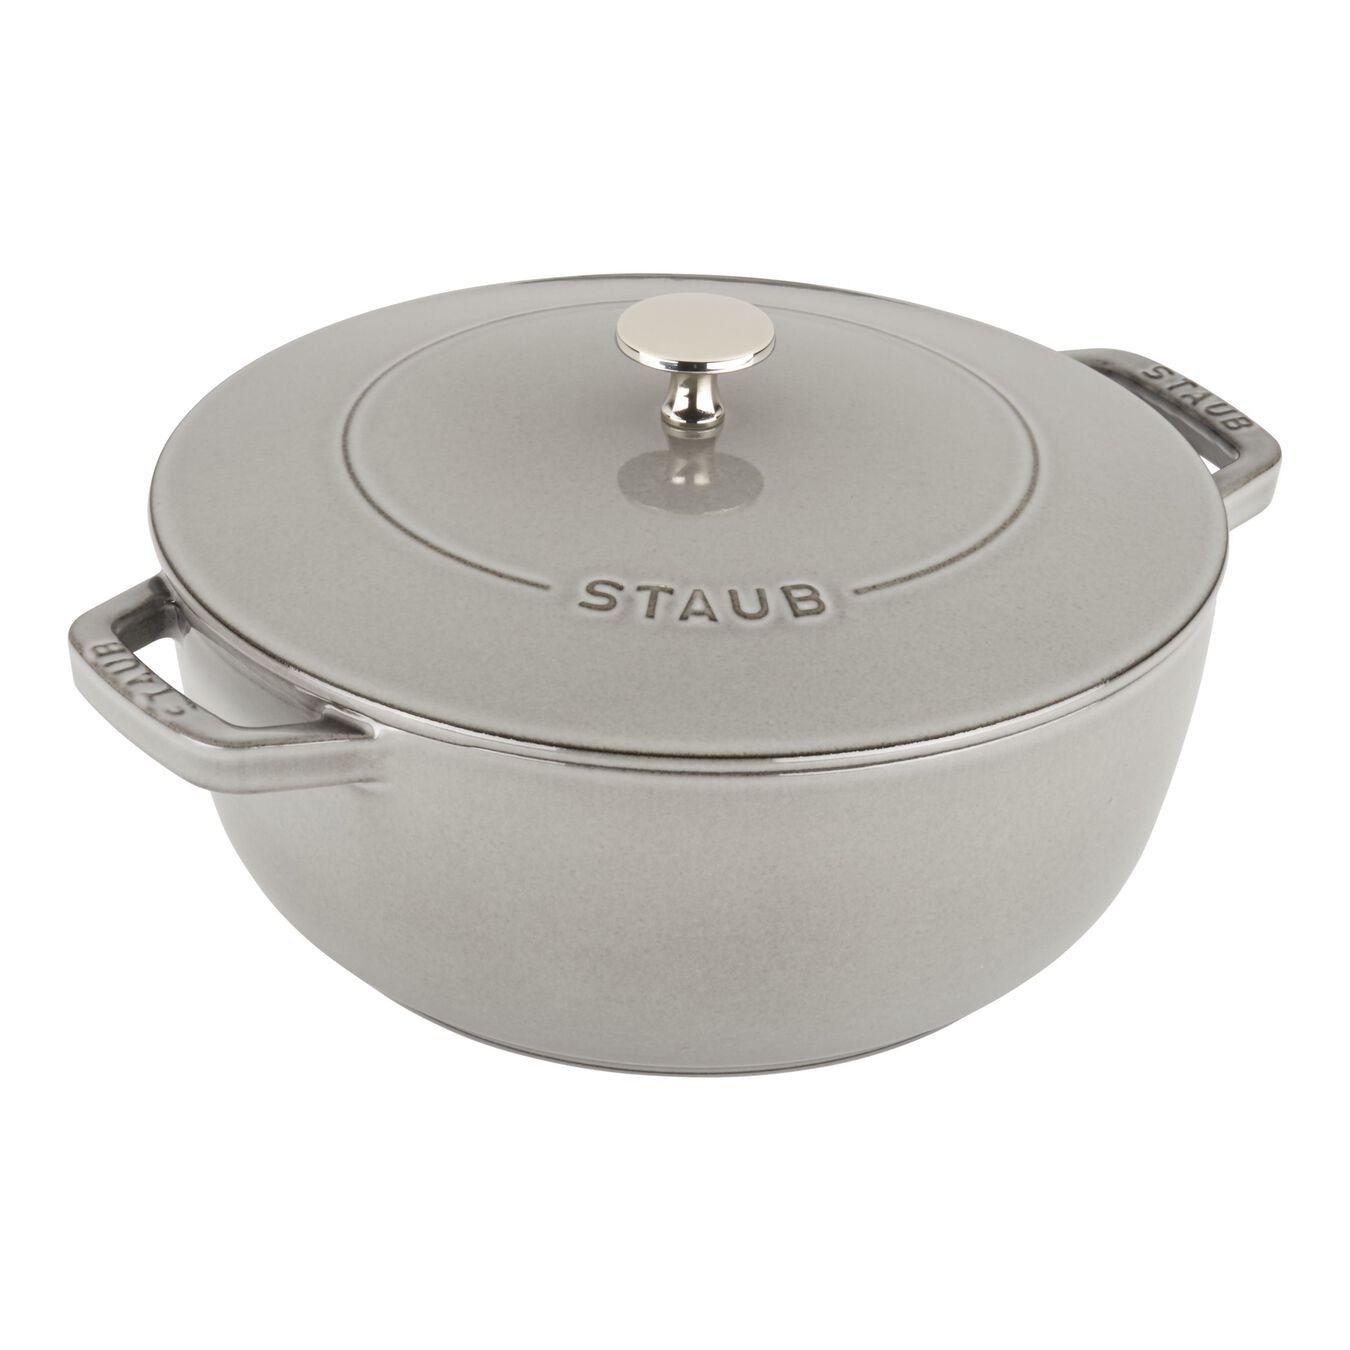 Staub Cast Iron Essential Oven, 3.75 qt, Graphite Grey - Kitchen Universe